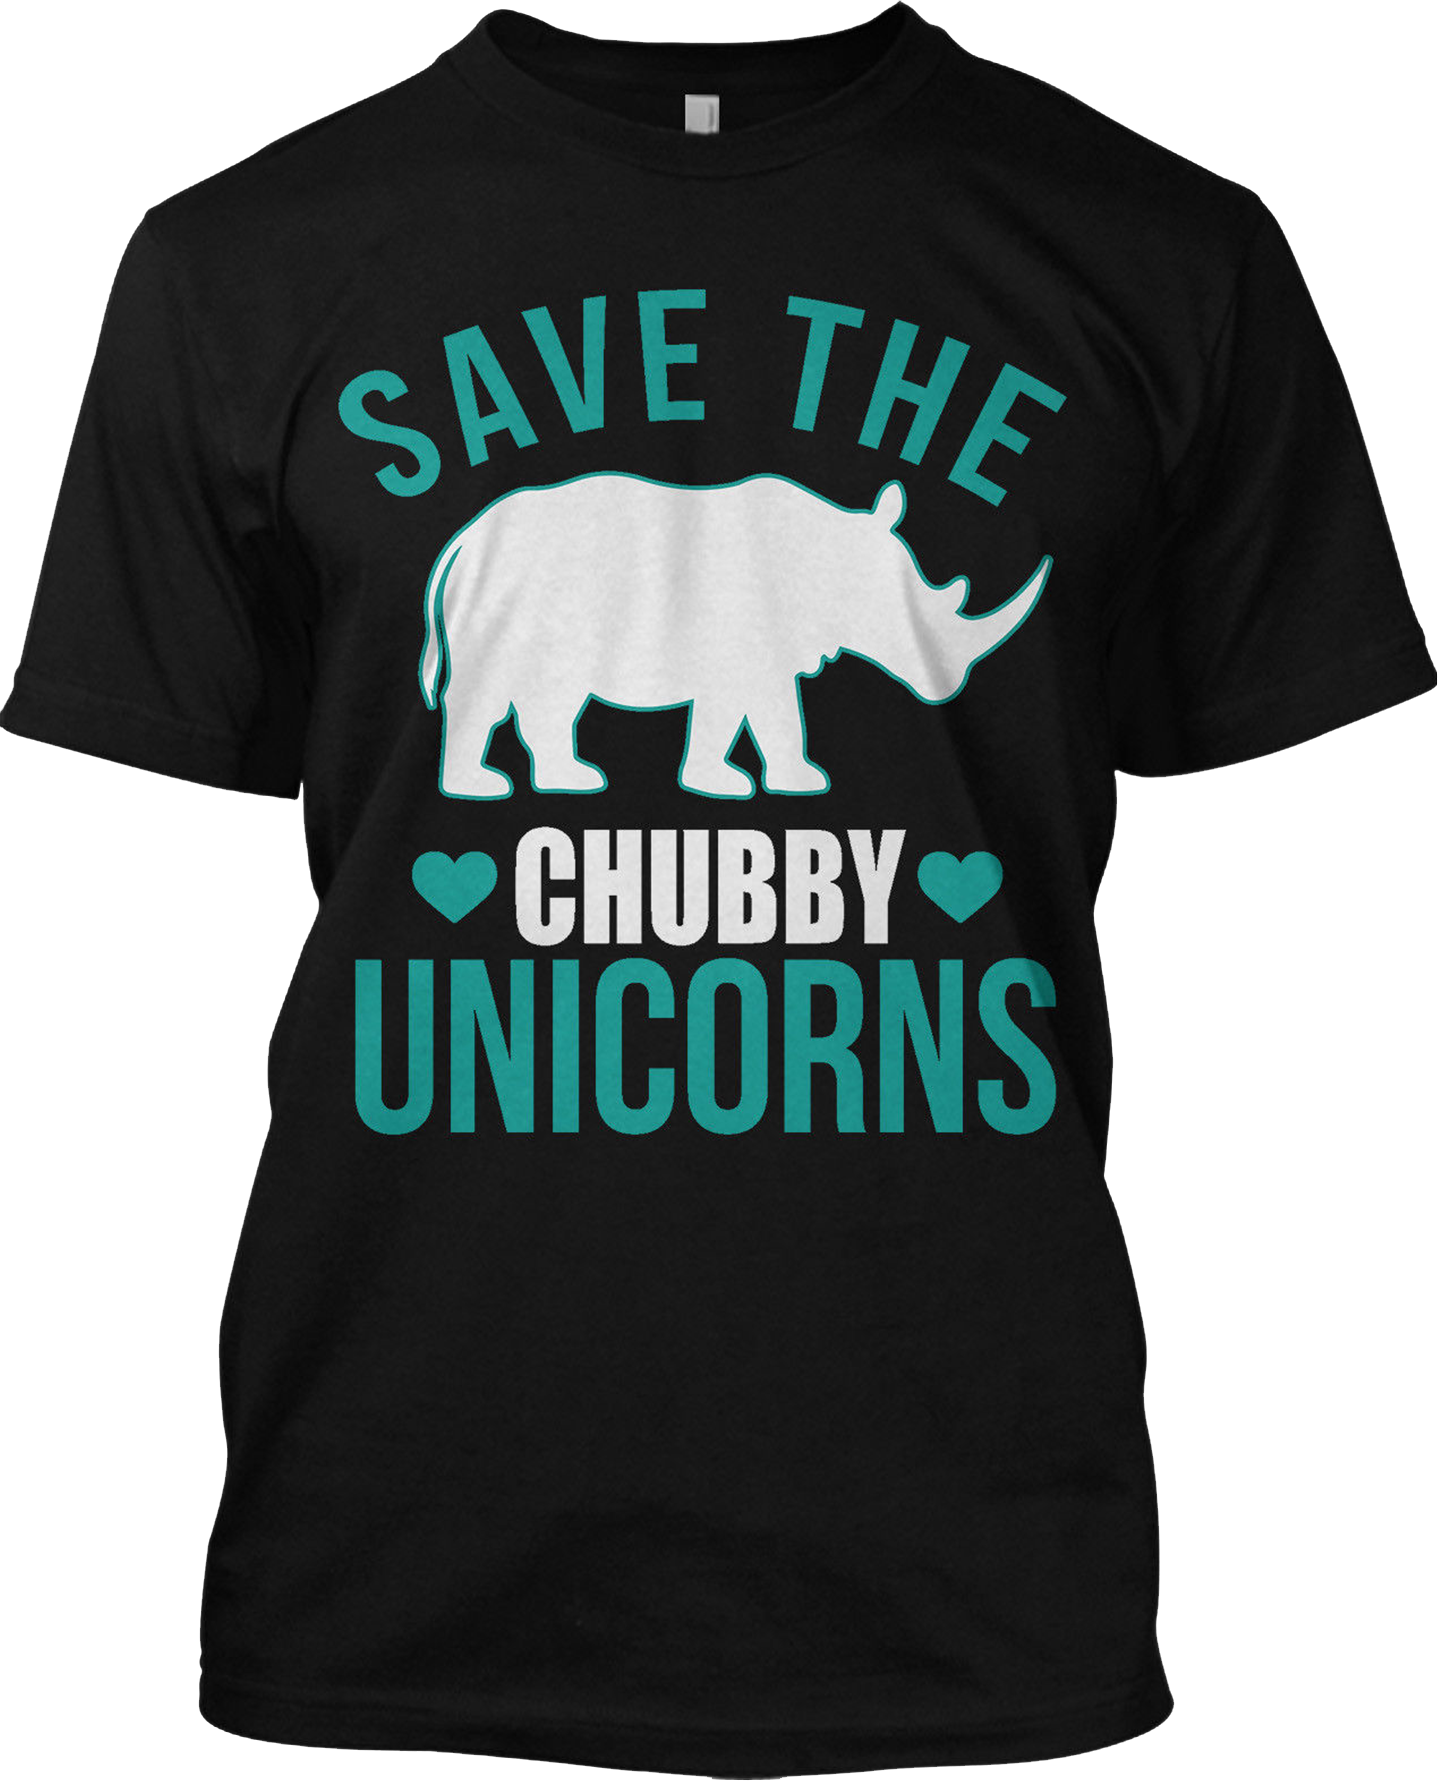 Save The Chubby Unicorns Funny T Shirt Rhino Lovers Graphic Tee